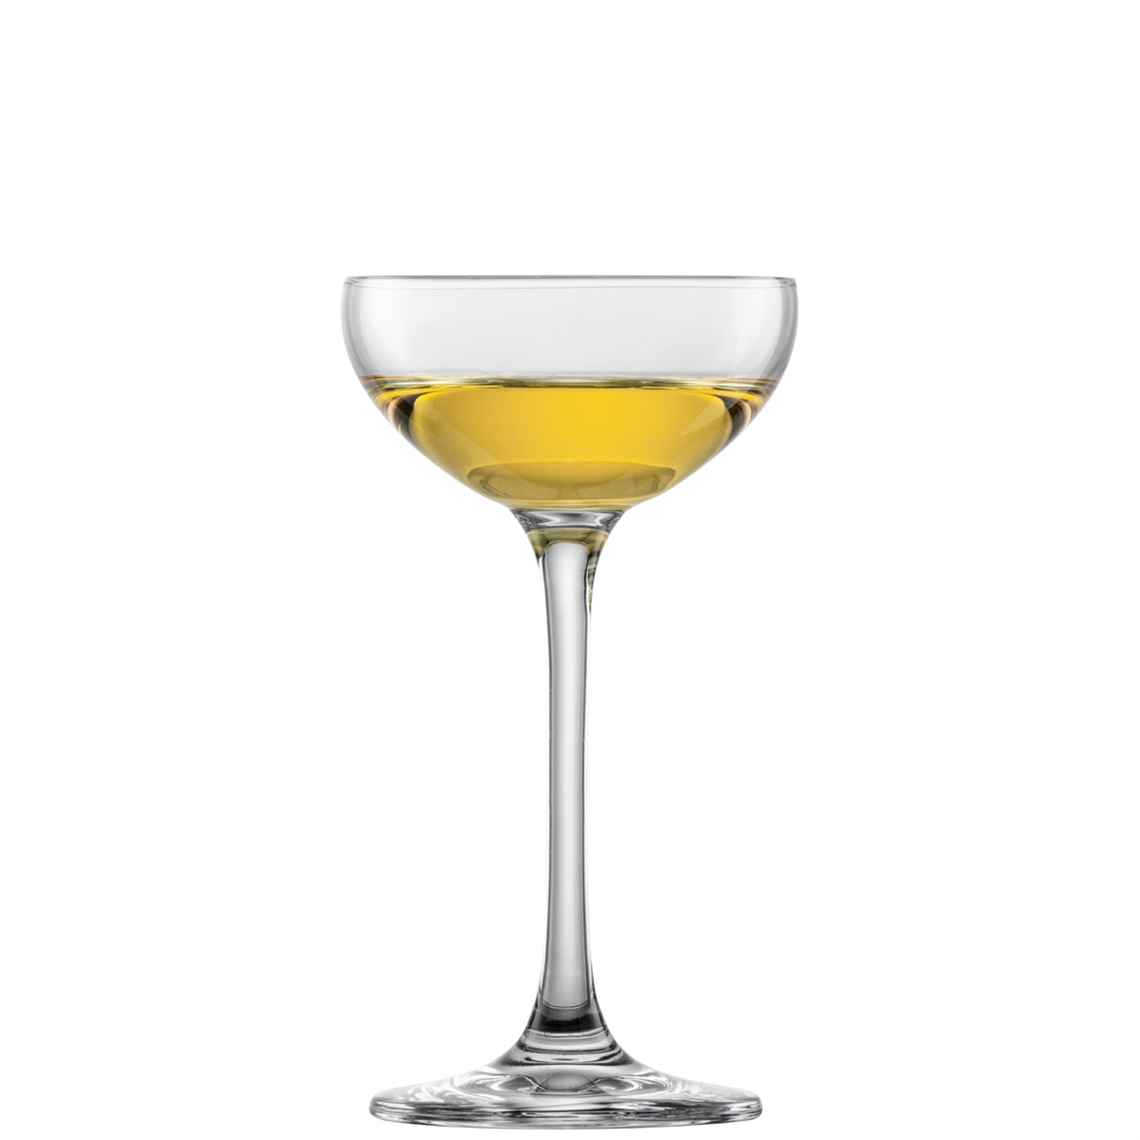 View more brandy / cognac glasses from our Liqueur Glasses range